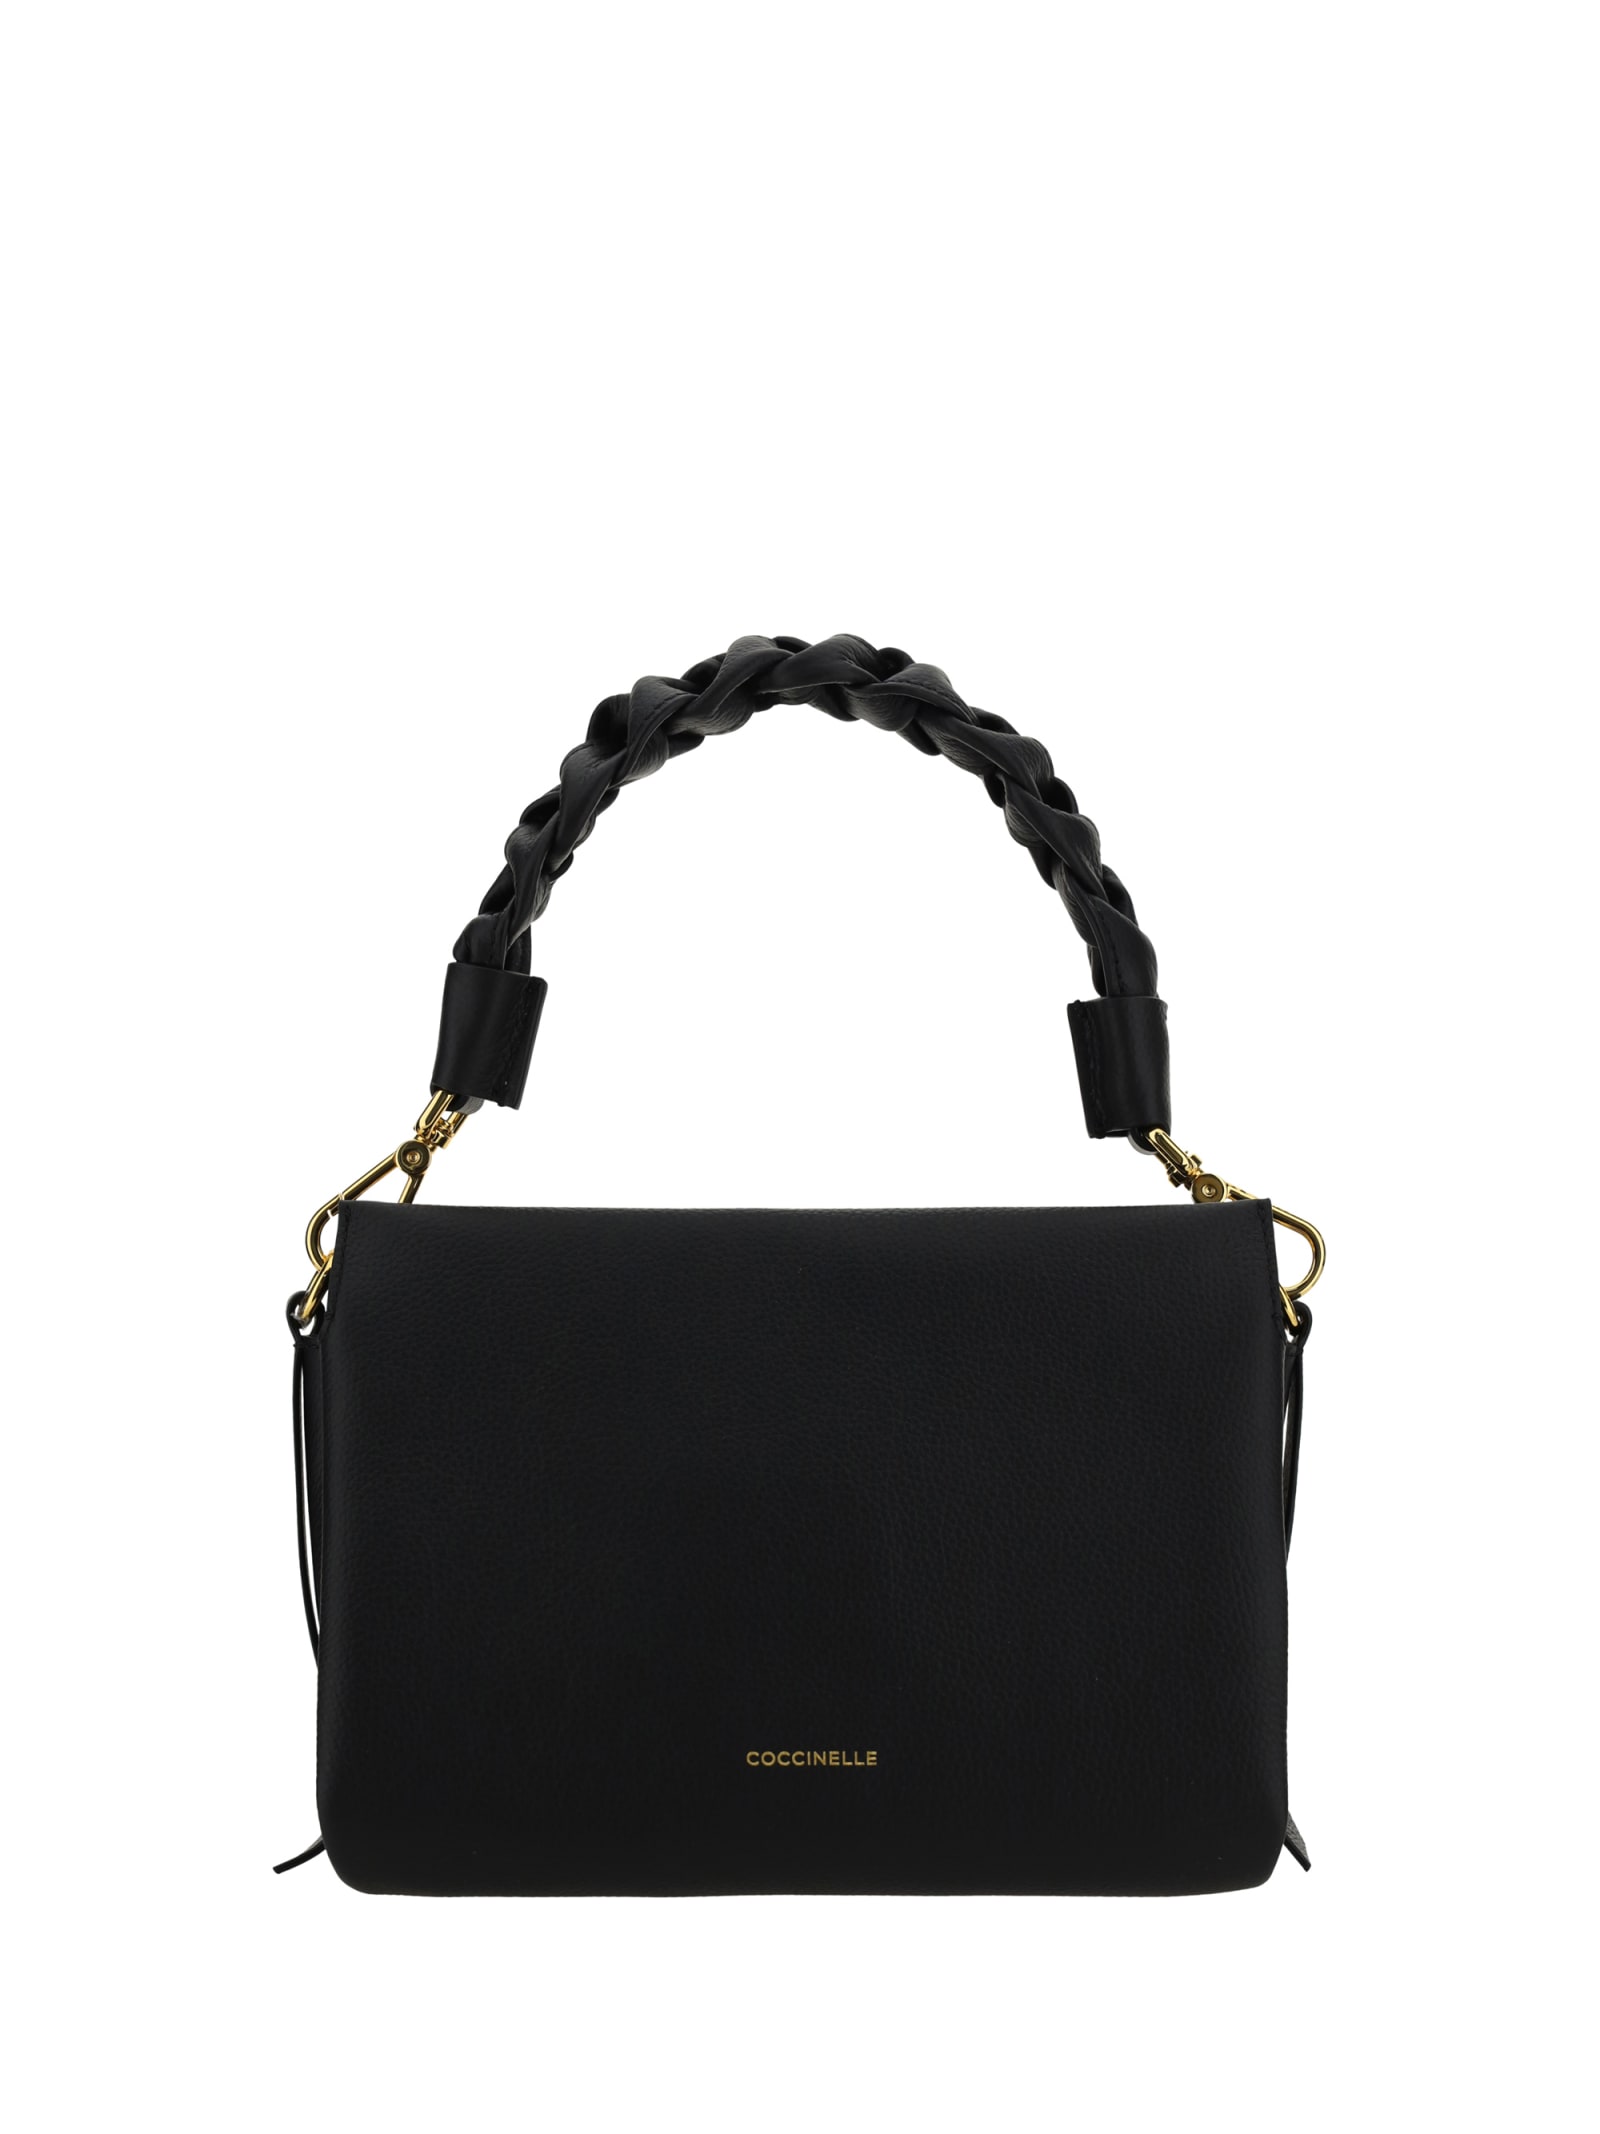 Coccinelle Boheme Handbag In Black